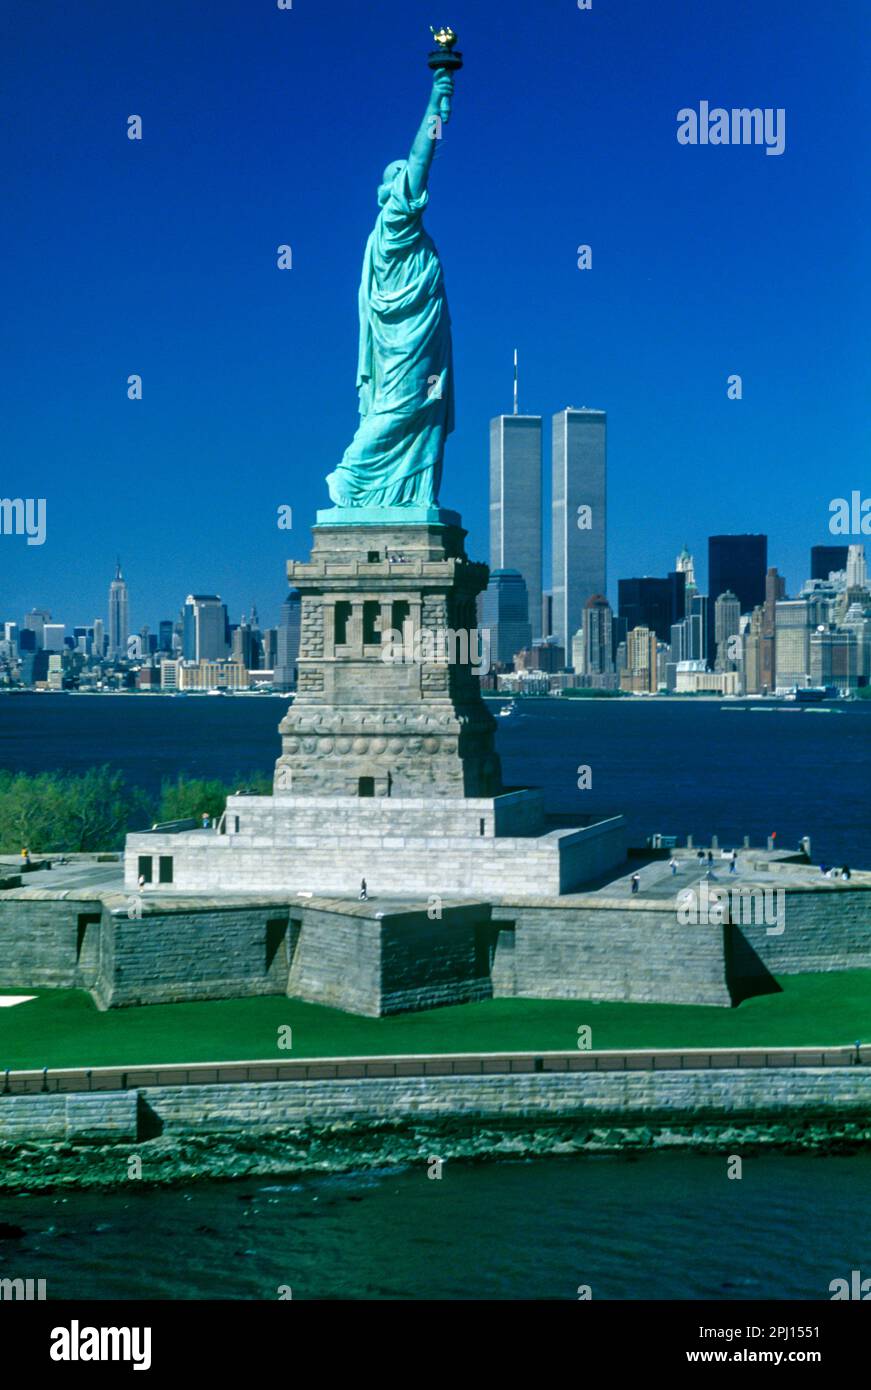 1994 HISTORICAL STATUE OF LIBERTY (©F A BARTHOLDI 1886) TWIN TOWERS (©MINORU YAMASAKI 1973) DOWNTOWN SKYLINE NEW YORK HARBOR NEW YORK CITY USA Stock Photo